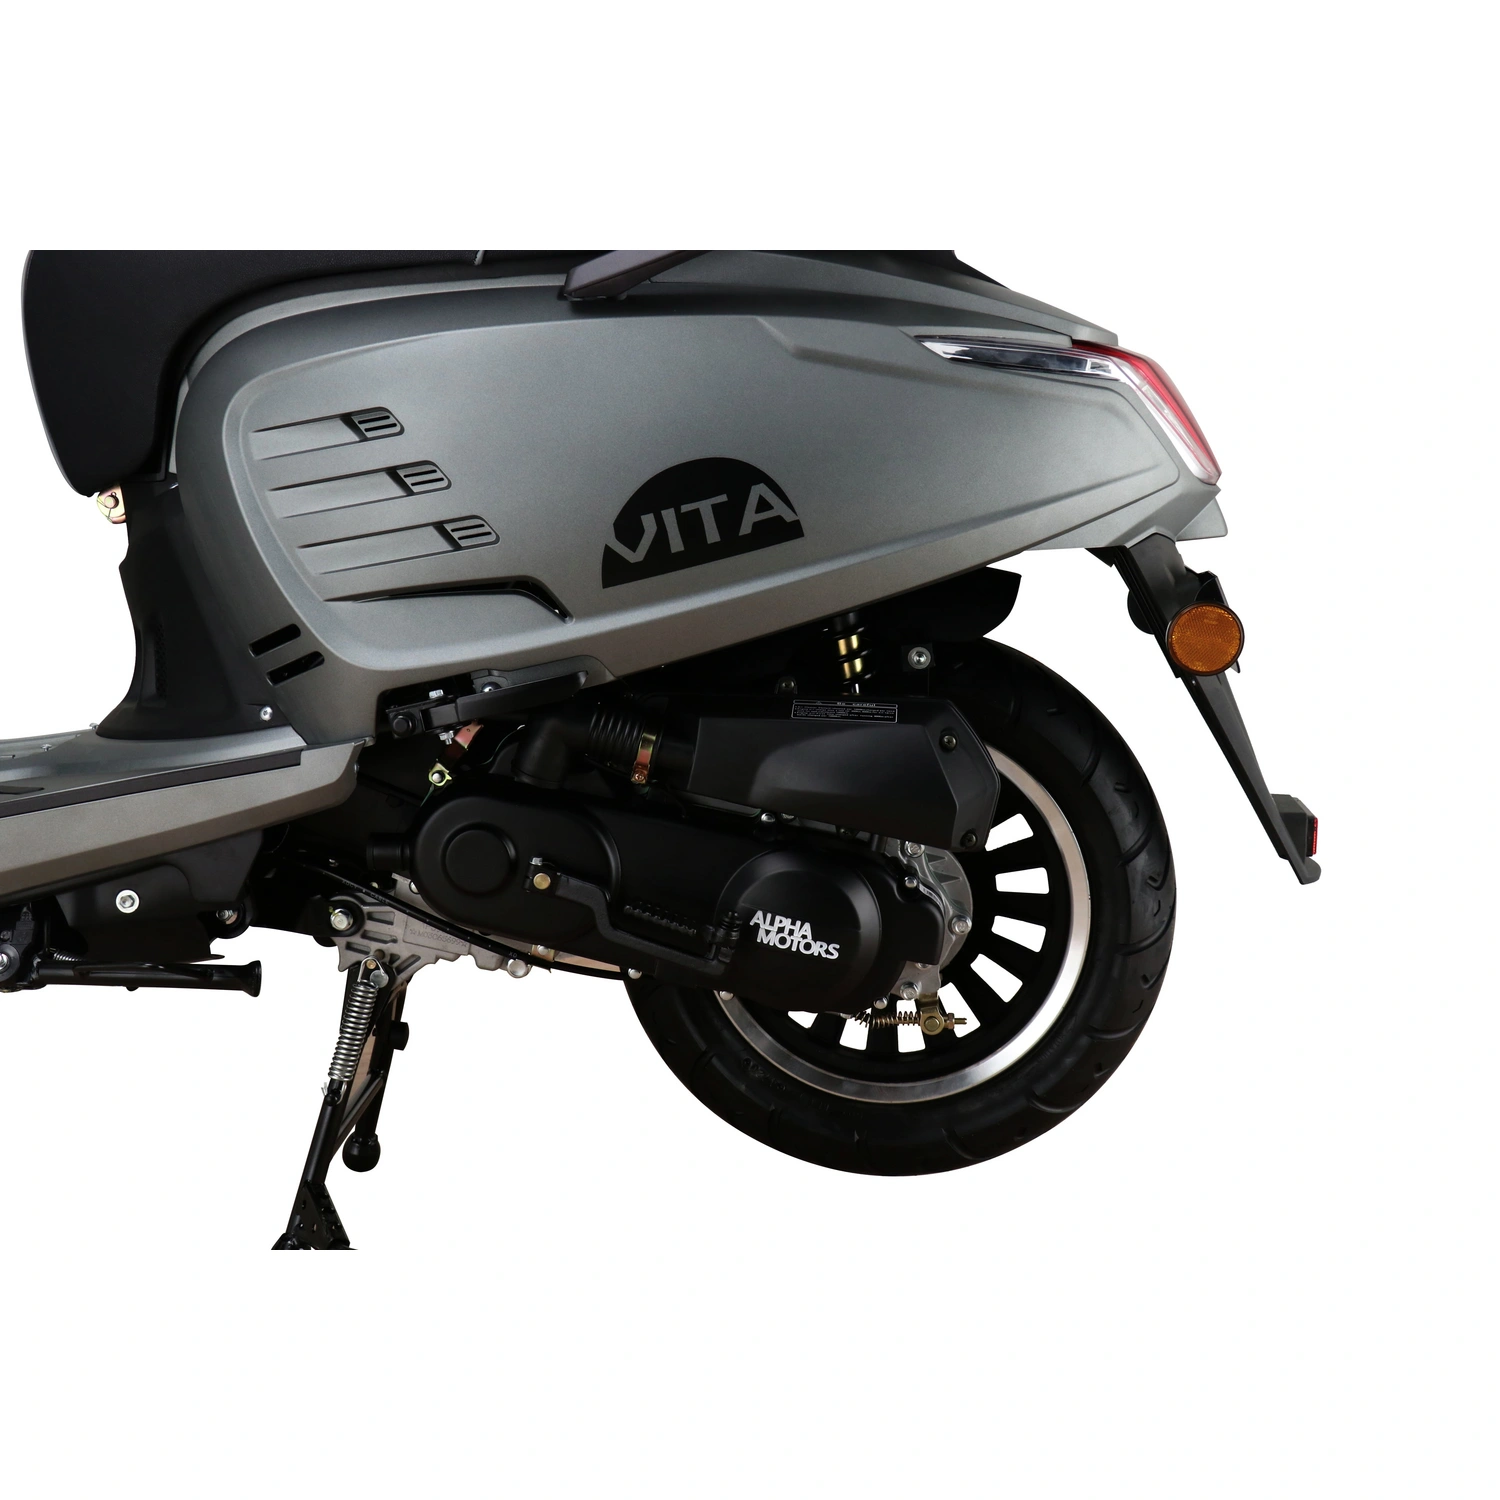 cm³, 45km/h, ALPHA 50 »Vita«, MOTORS Motorroller Euro 5